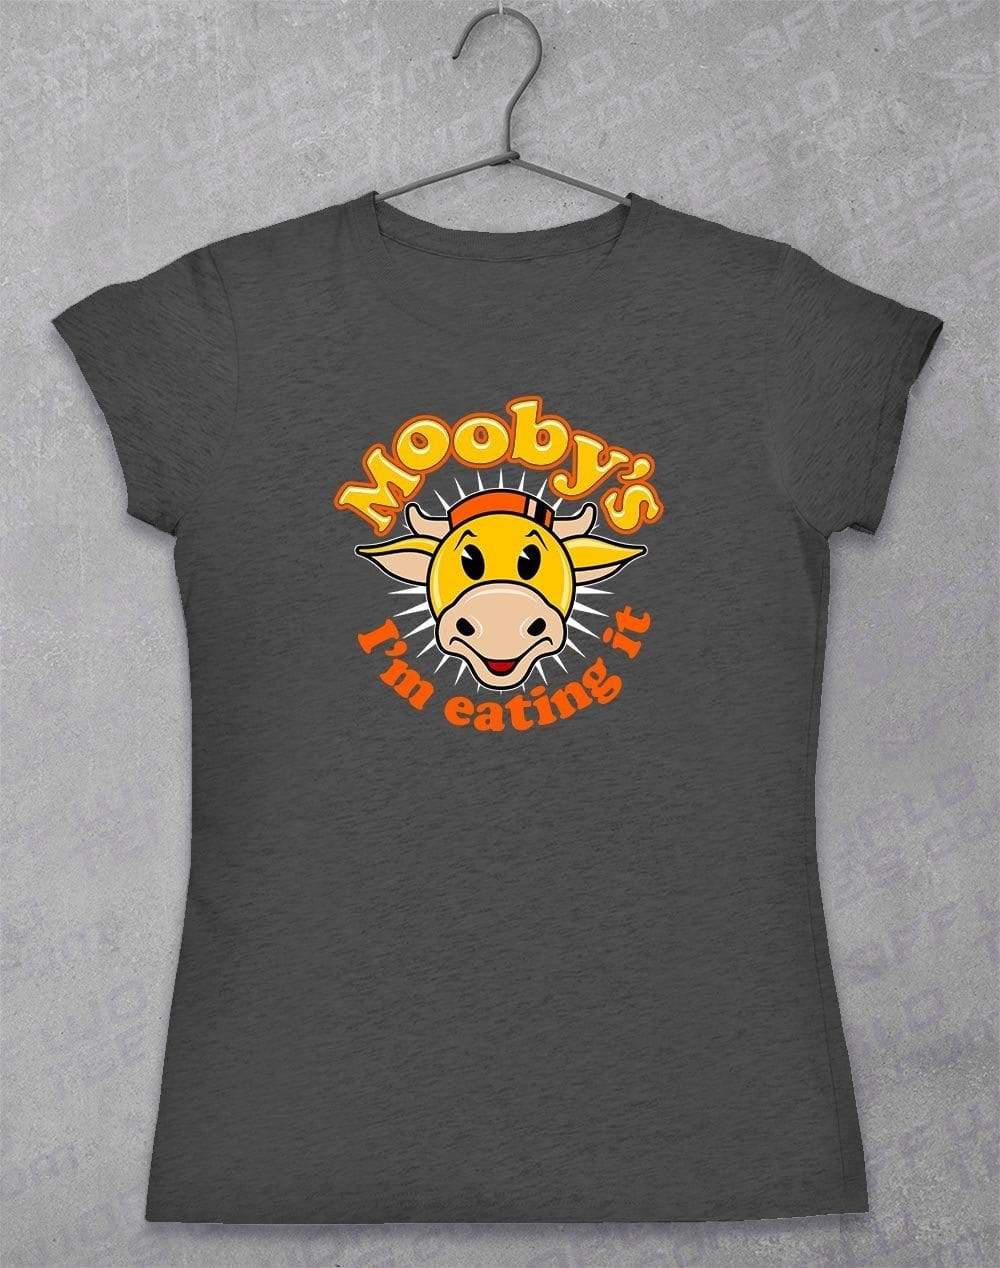 Moobys Women's T-Shirt 8-10 / Dark Heather  - Off World Tees